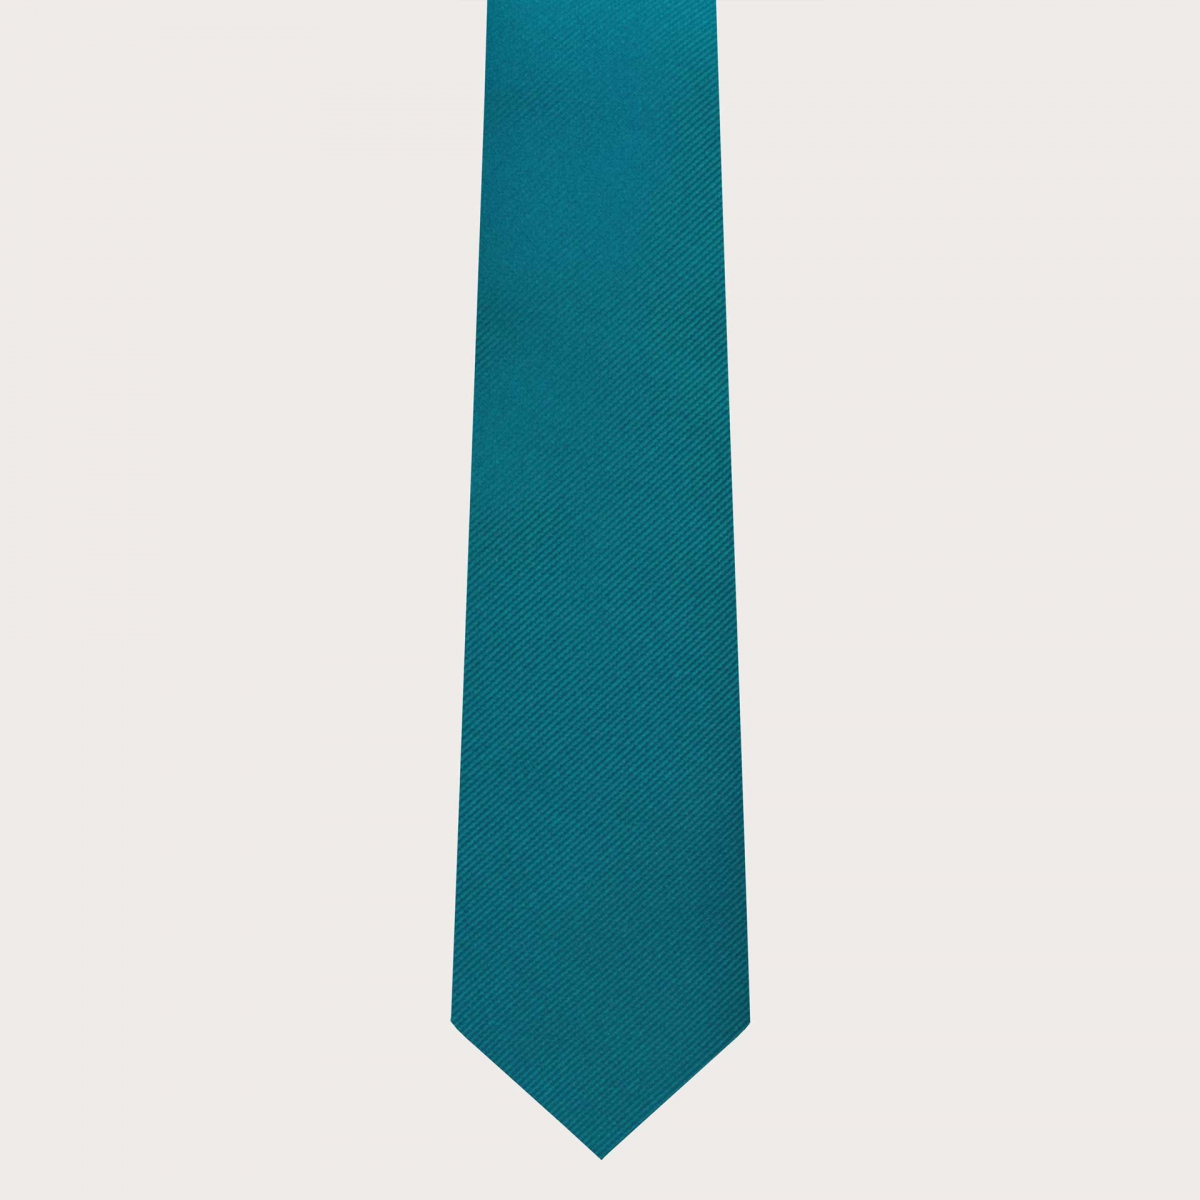 Petrol green necktie in pure silk